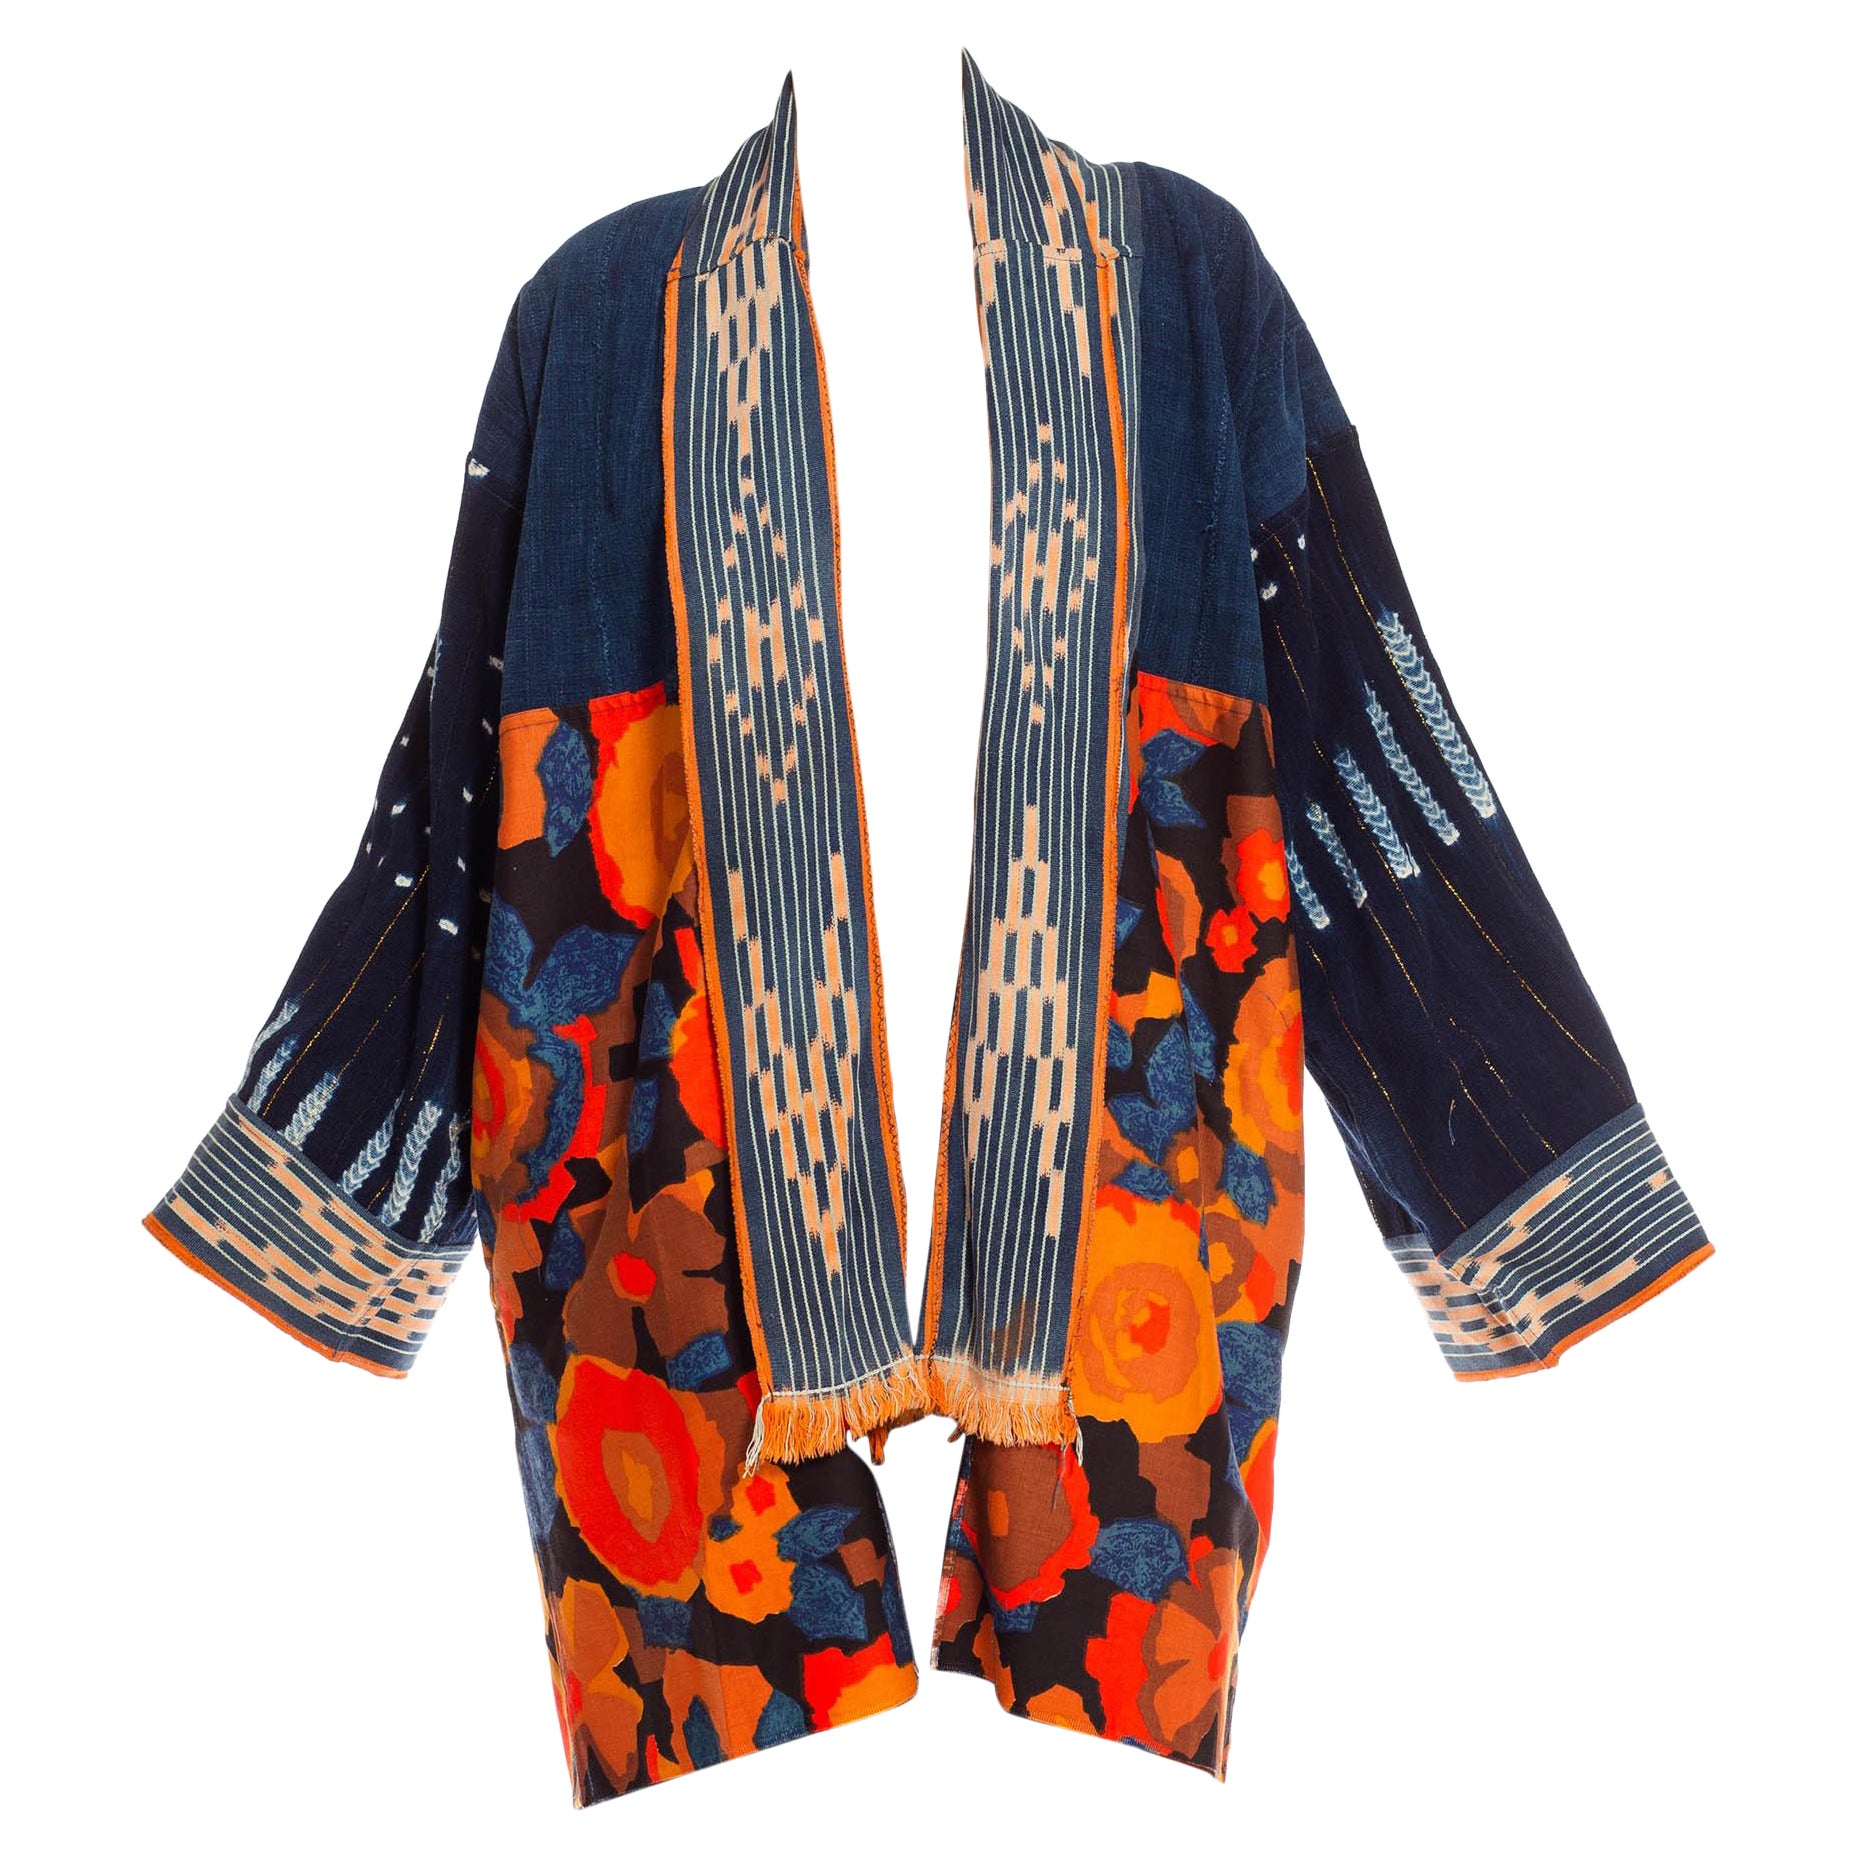 Morphew Collection - Tissu en coton bleu et orange vintage africain cyclisé, collection Indig en vente